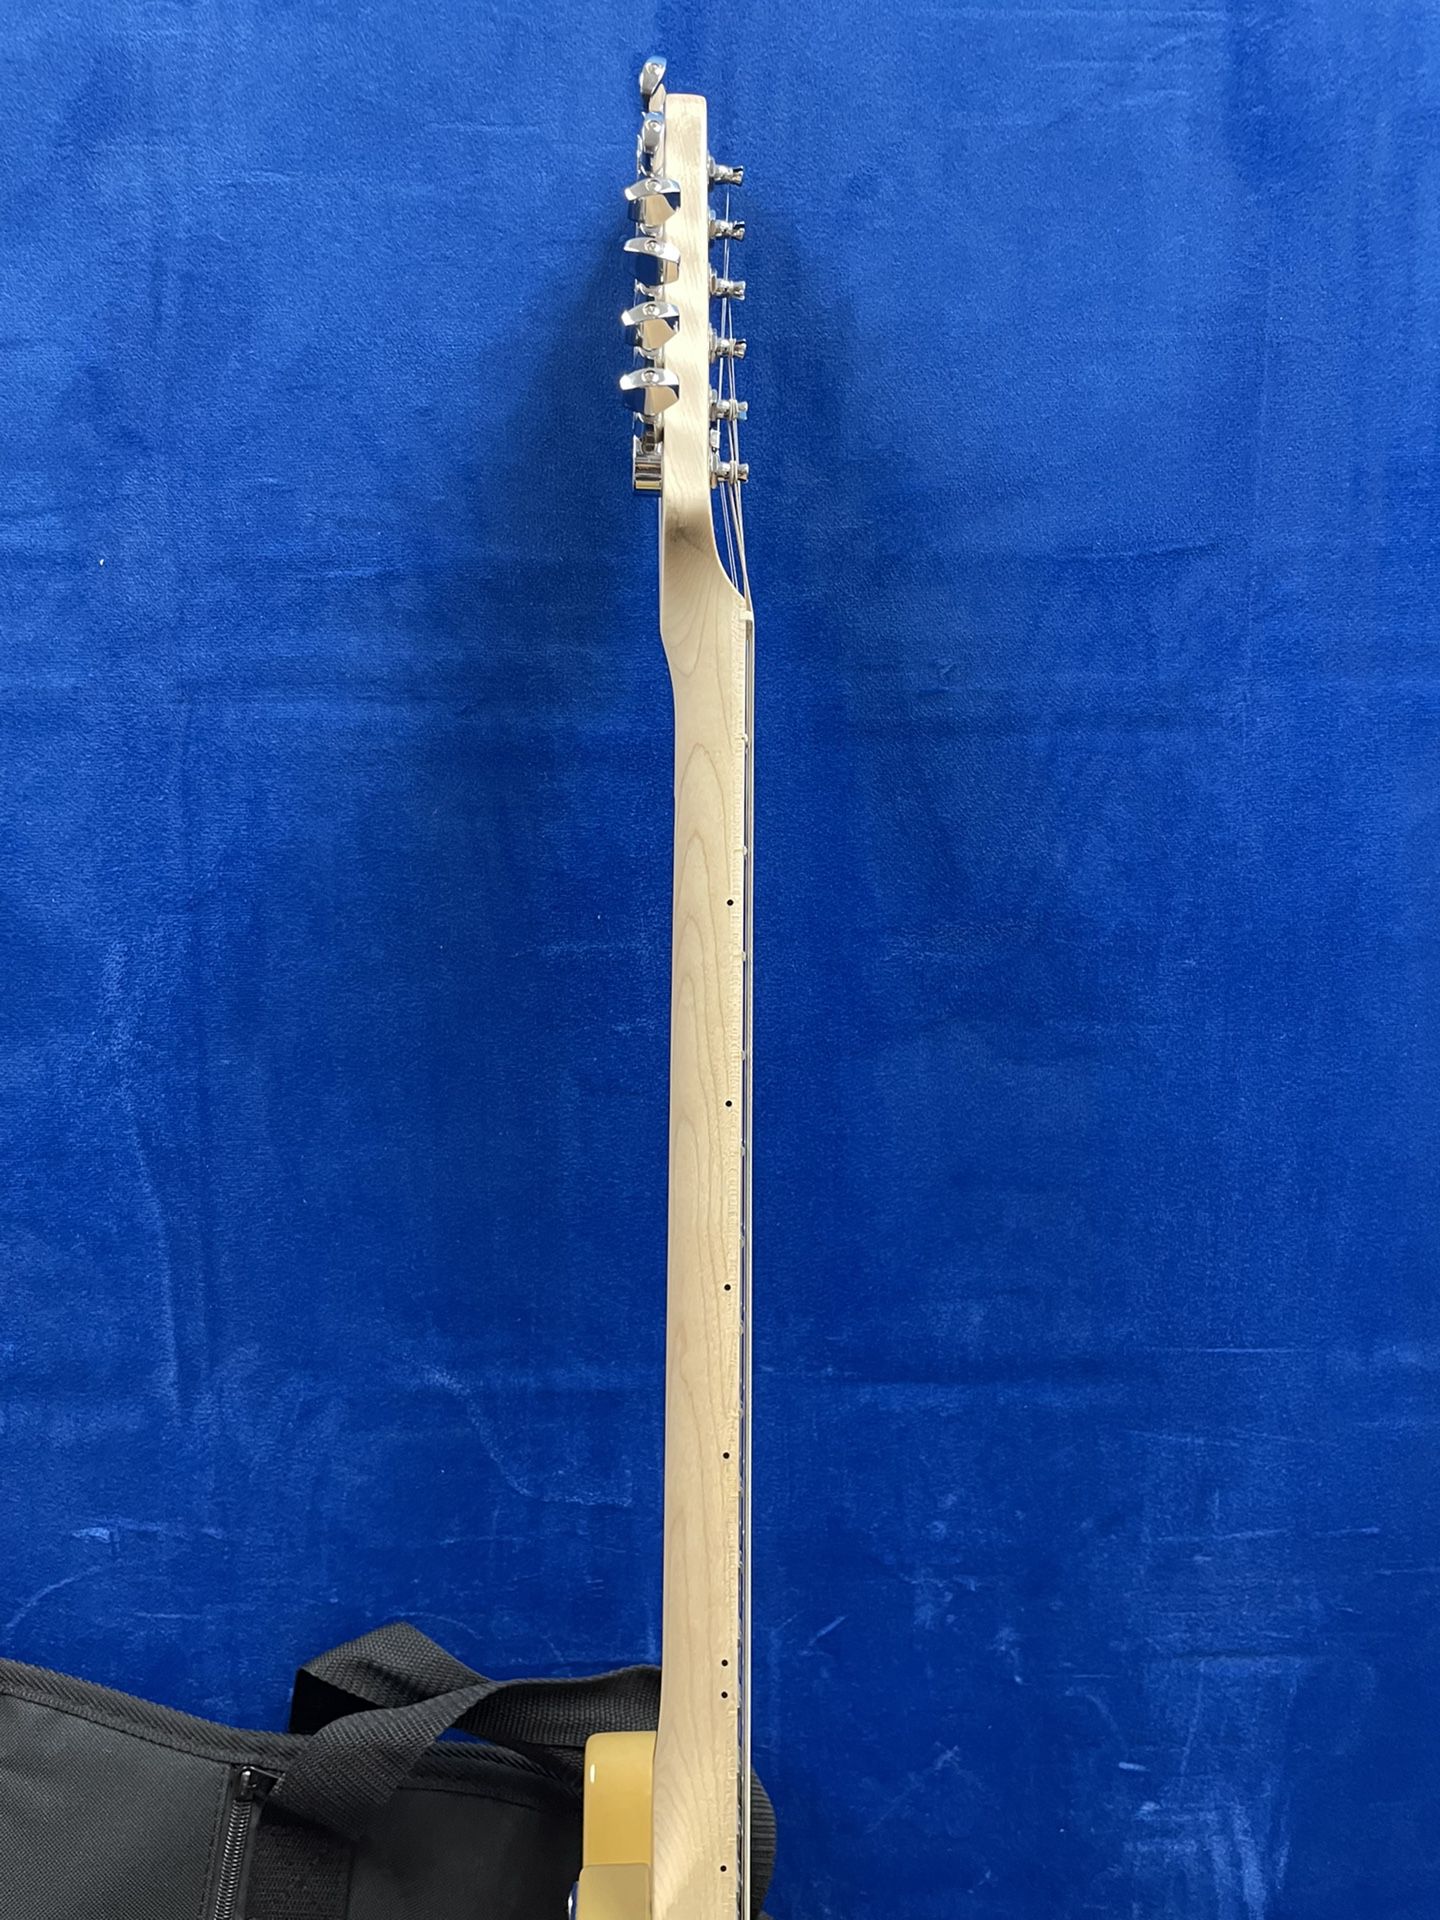 Fender Affinity Electric Guitar